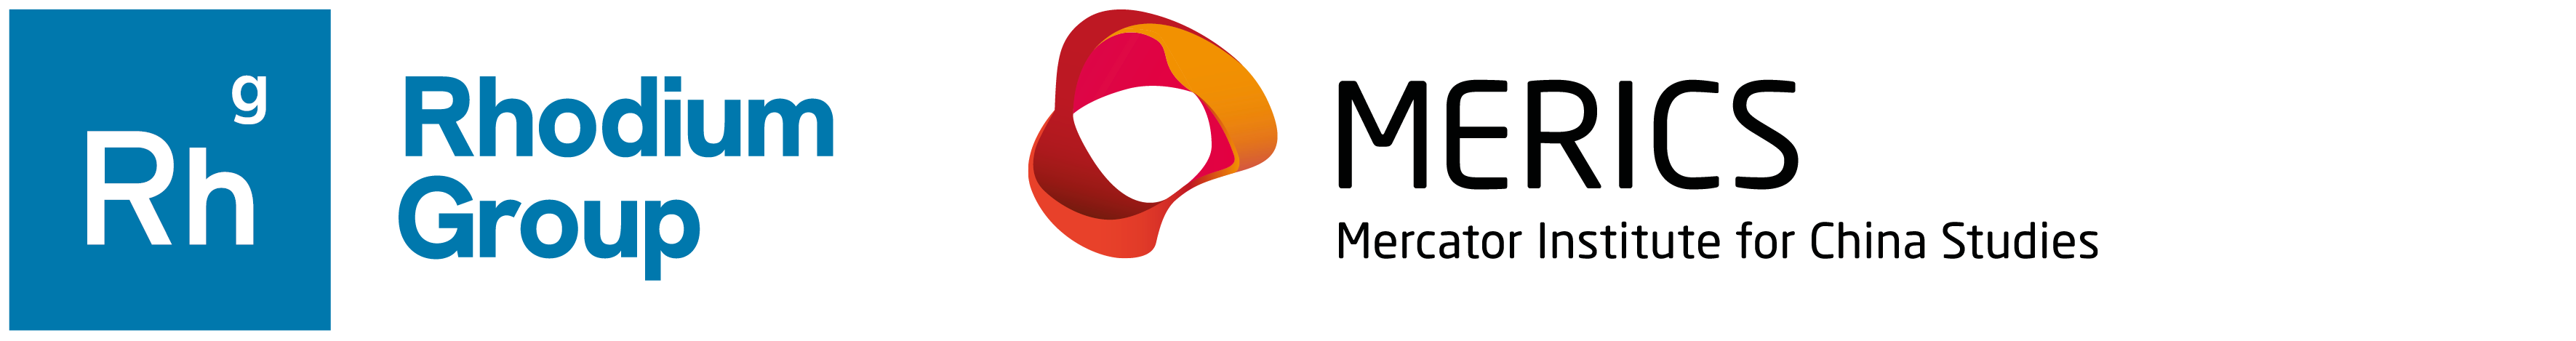 Logo MERICS and Rhodium Group